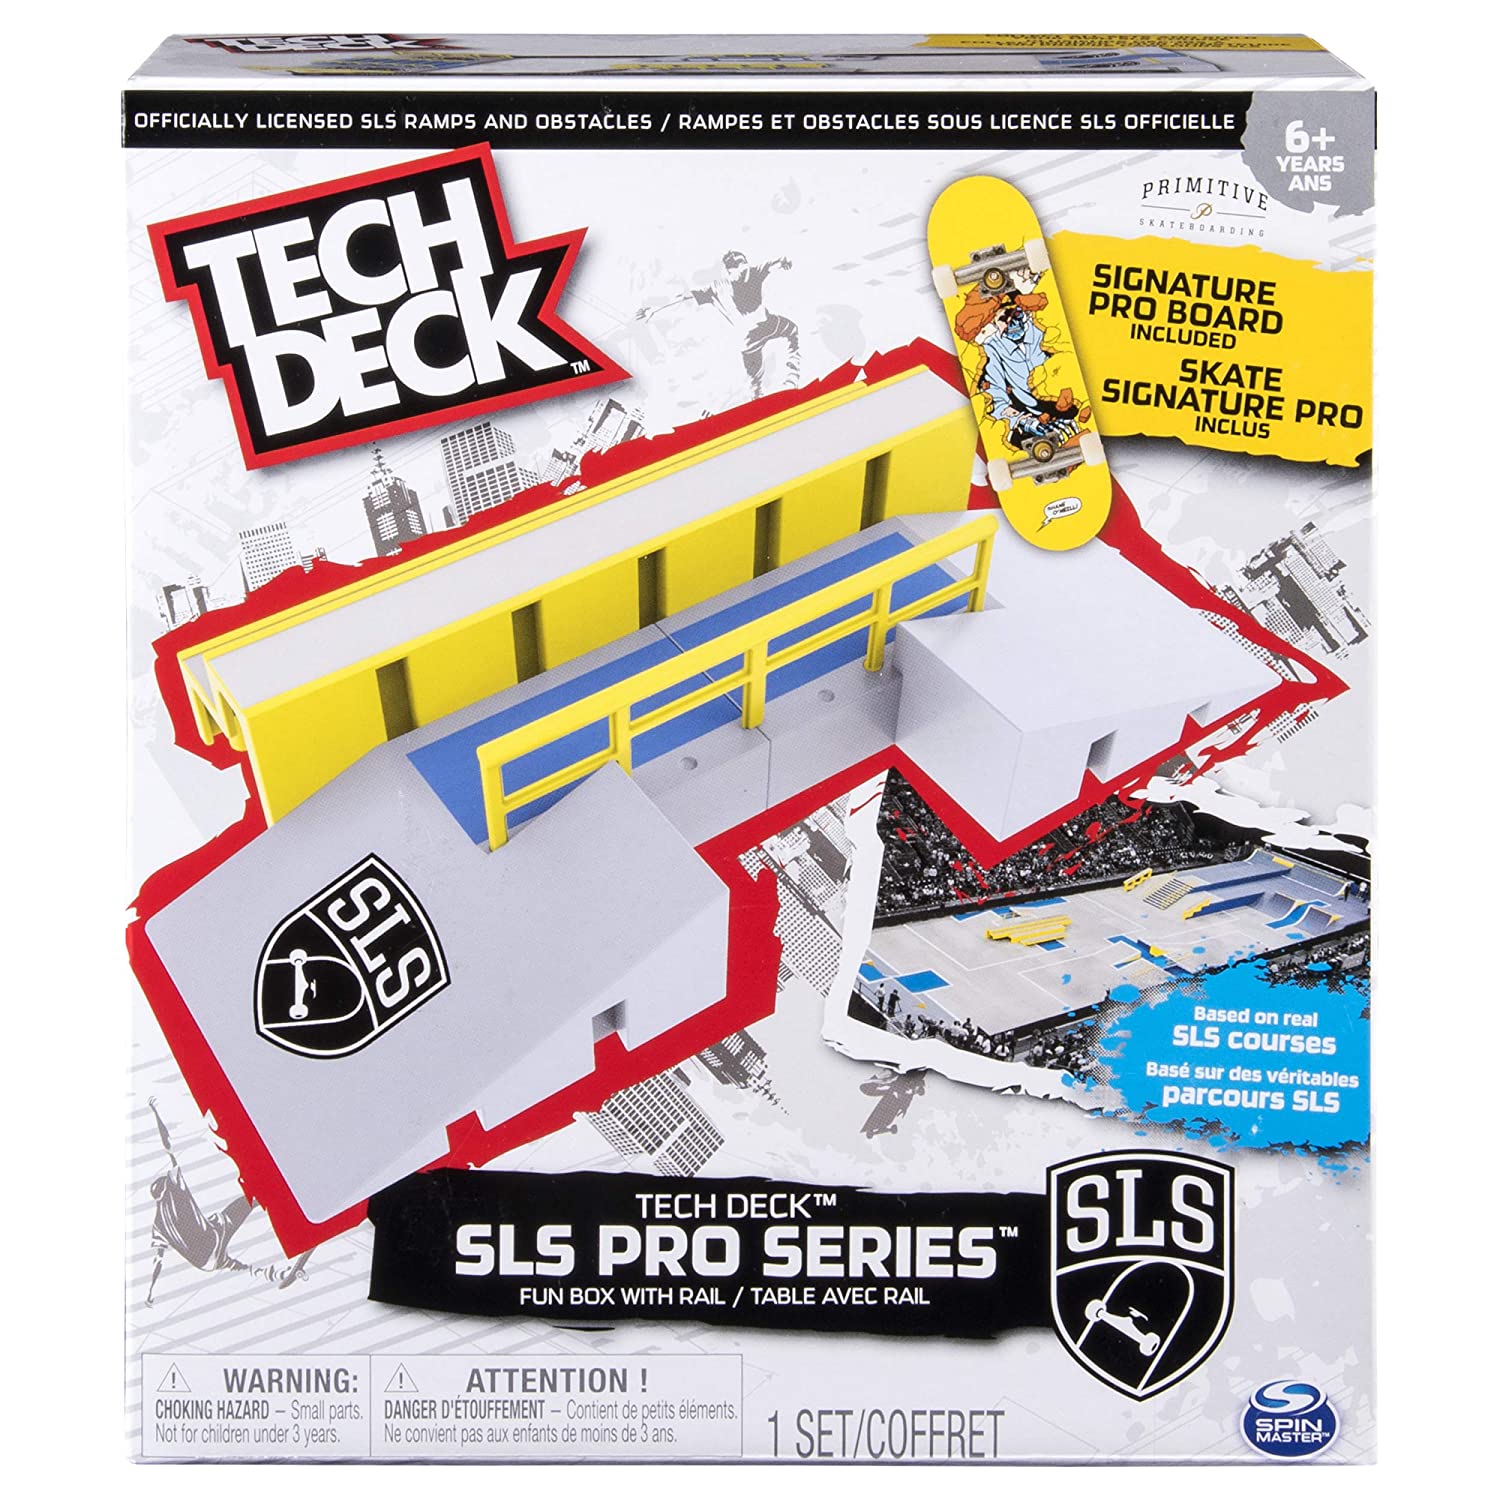 TECH DECK – SLS Pro Series Skate Park - Fun Box with Rail and Signature Pro Board